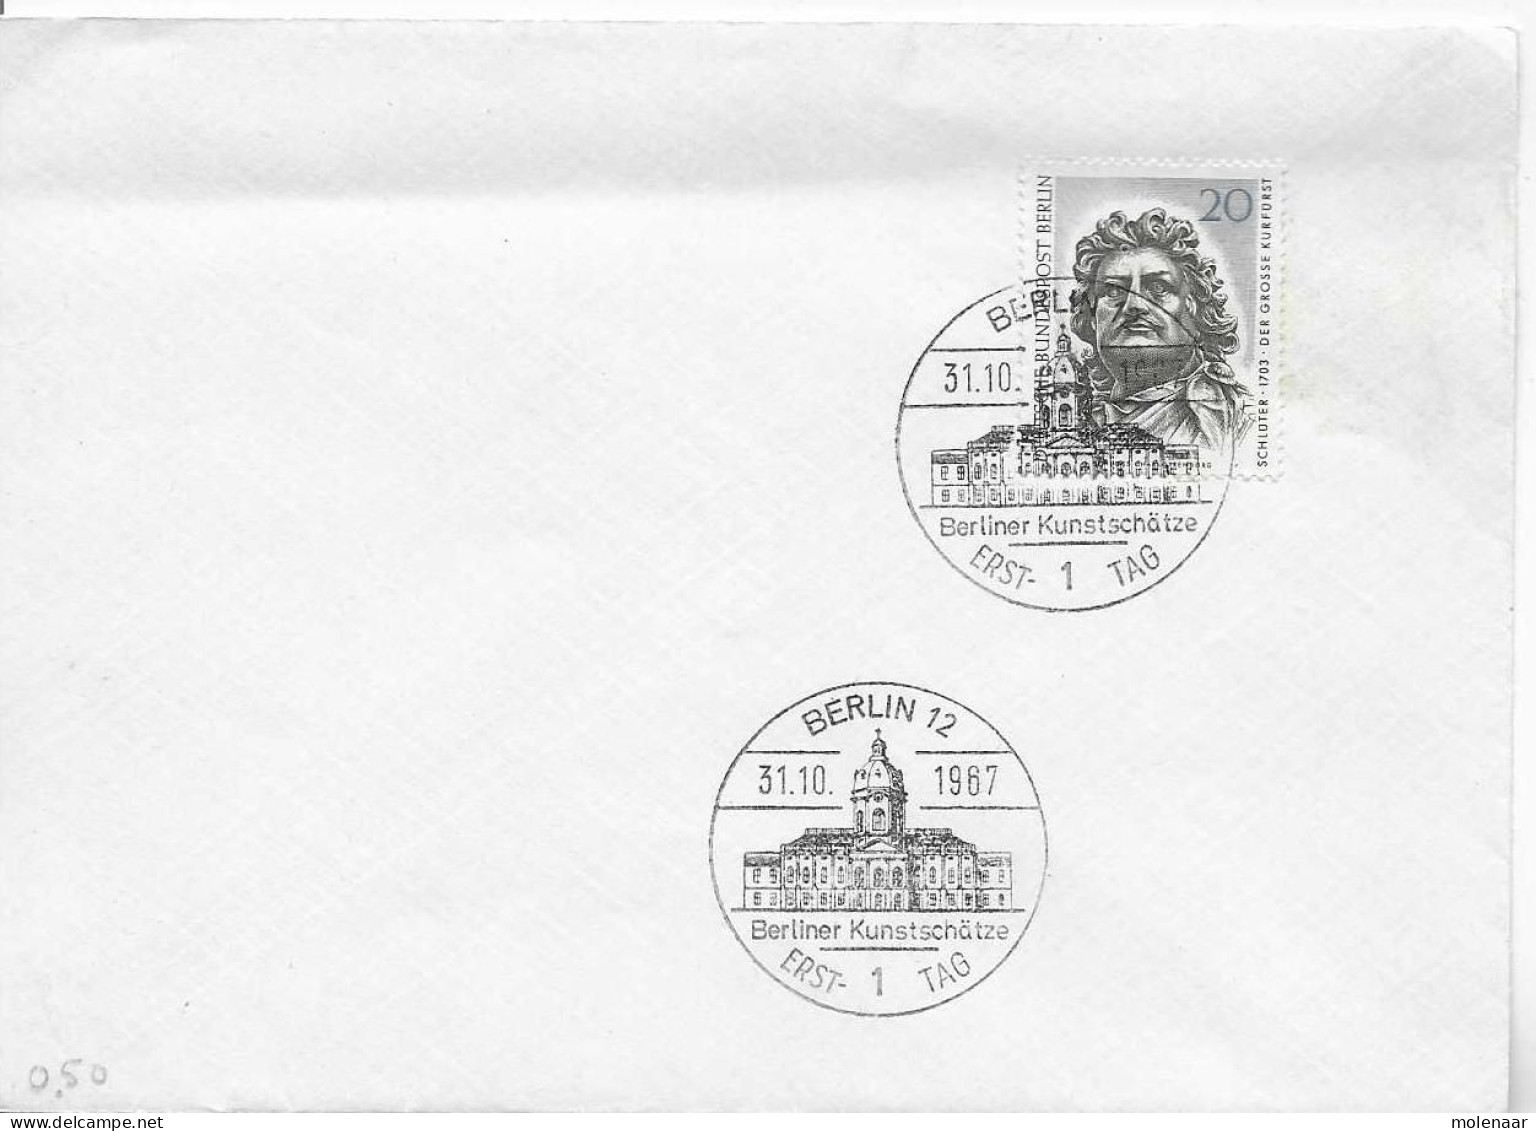 Postzegels > Europa > Duitsland > Berlijn > 1e Dag FDC (brieven) > 1948-1970 Met No. 303 (17155) - Blocchi